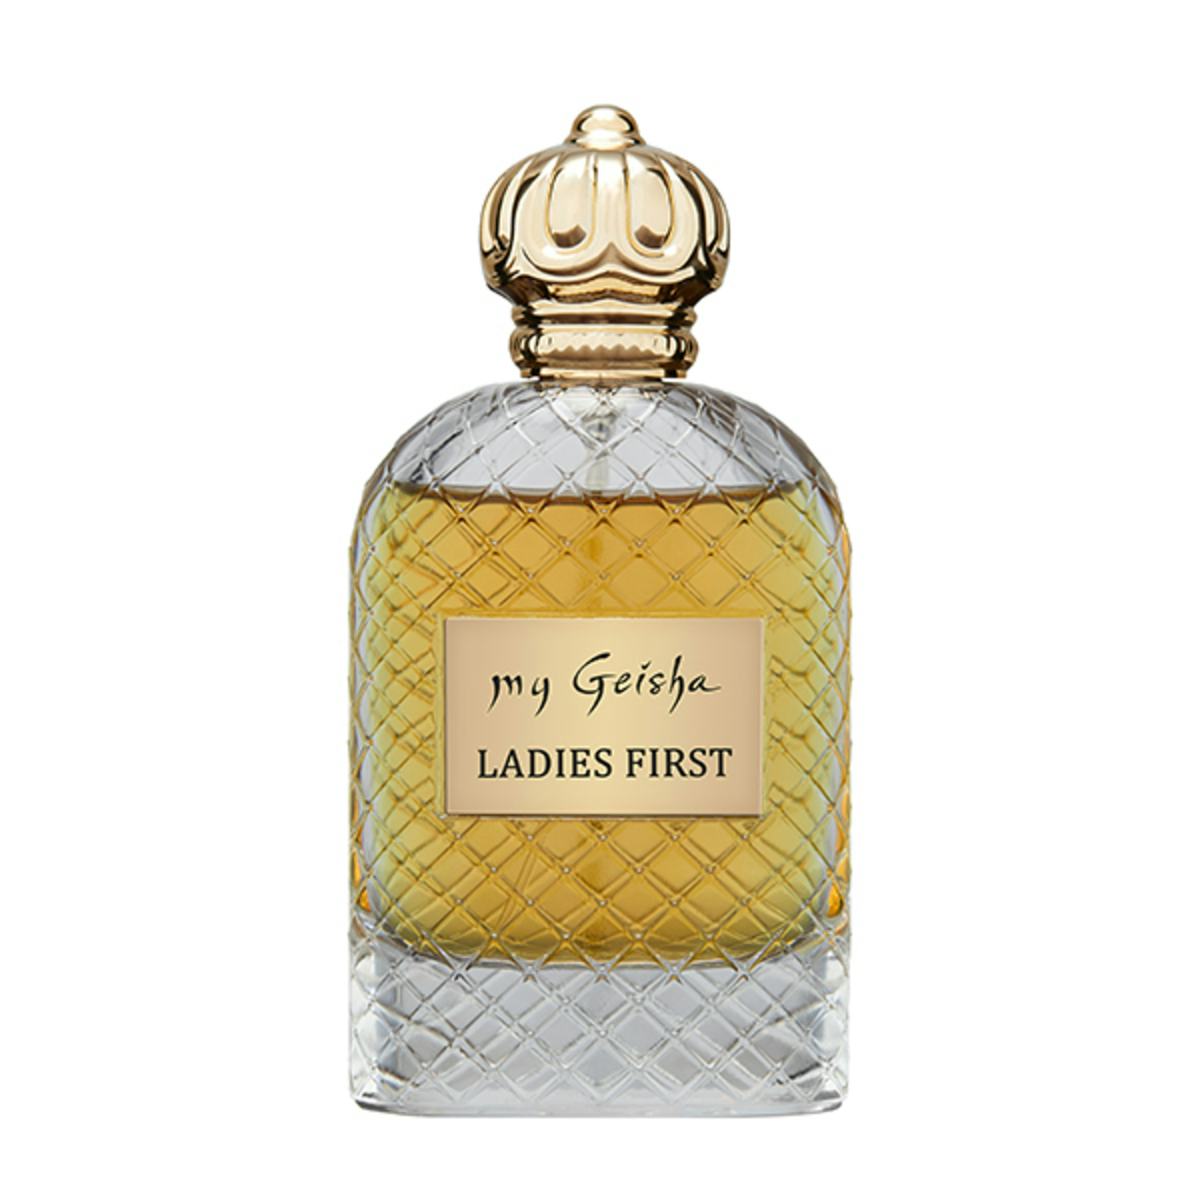 Extrait de parfum "Ladies First" 100 ml, artisanal product for direct sale in Switzerland